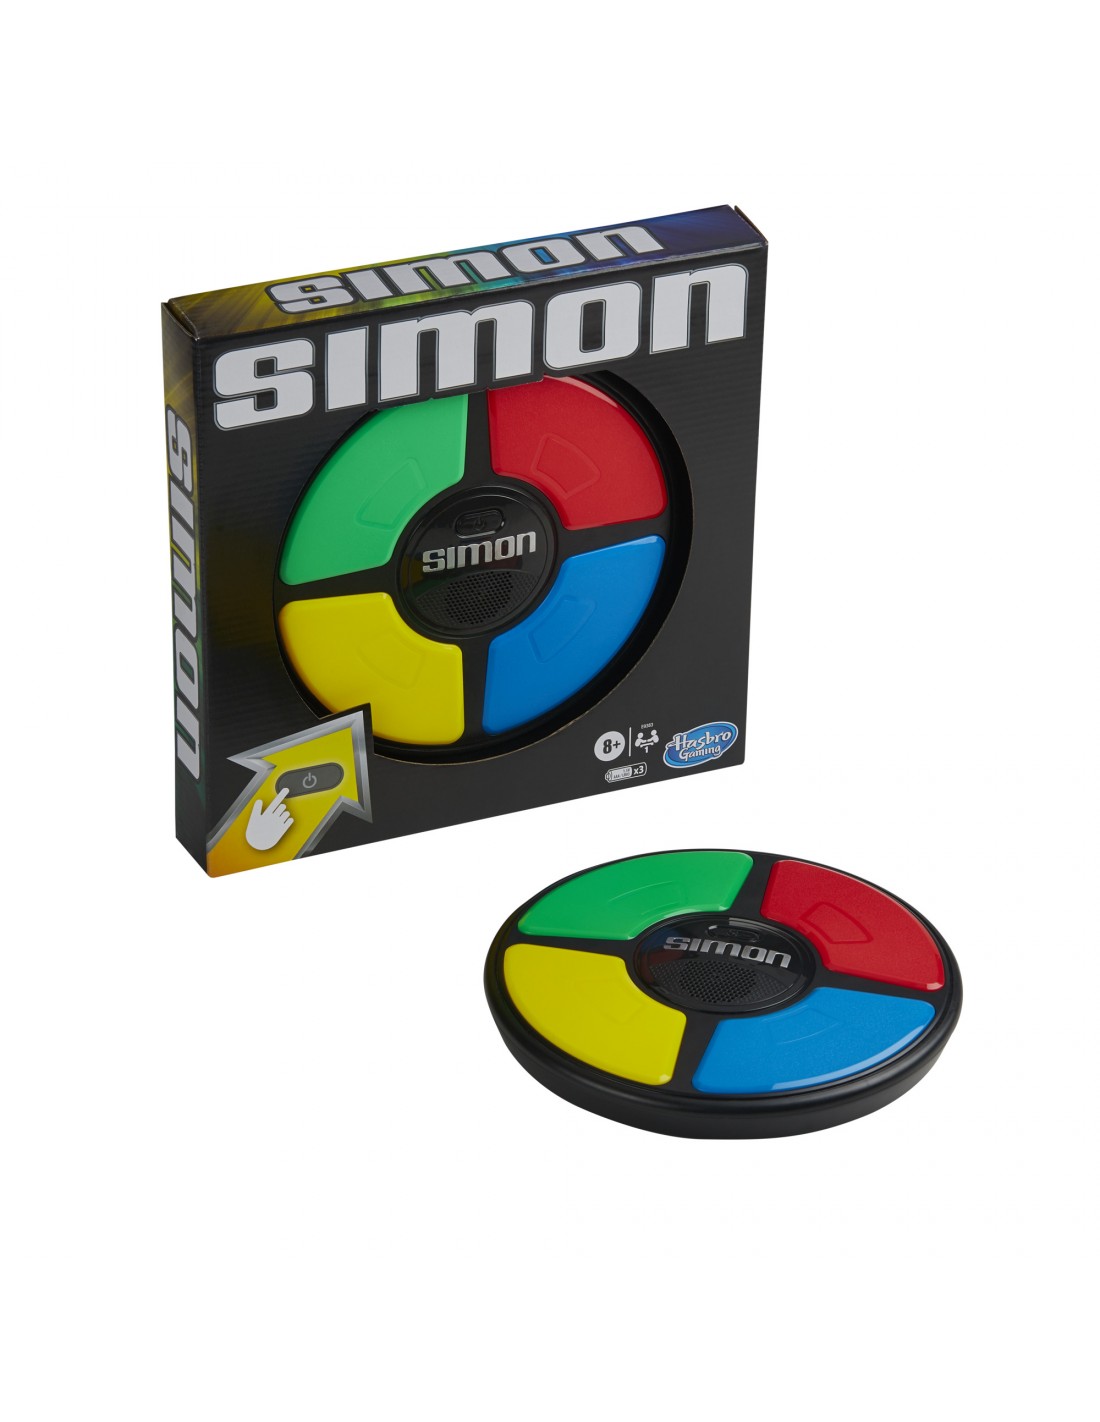 Juego de mesa Hasbro Gaming Simon Micro Series - Tiendas Jumbo